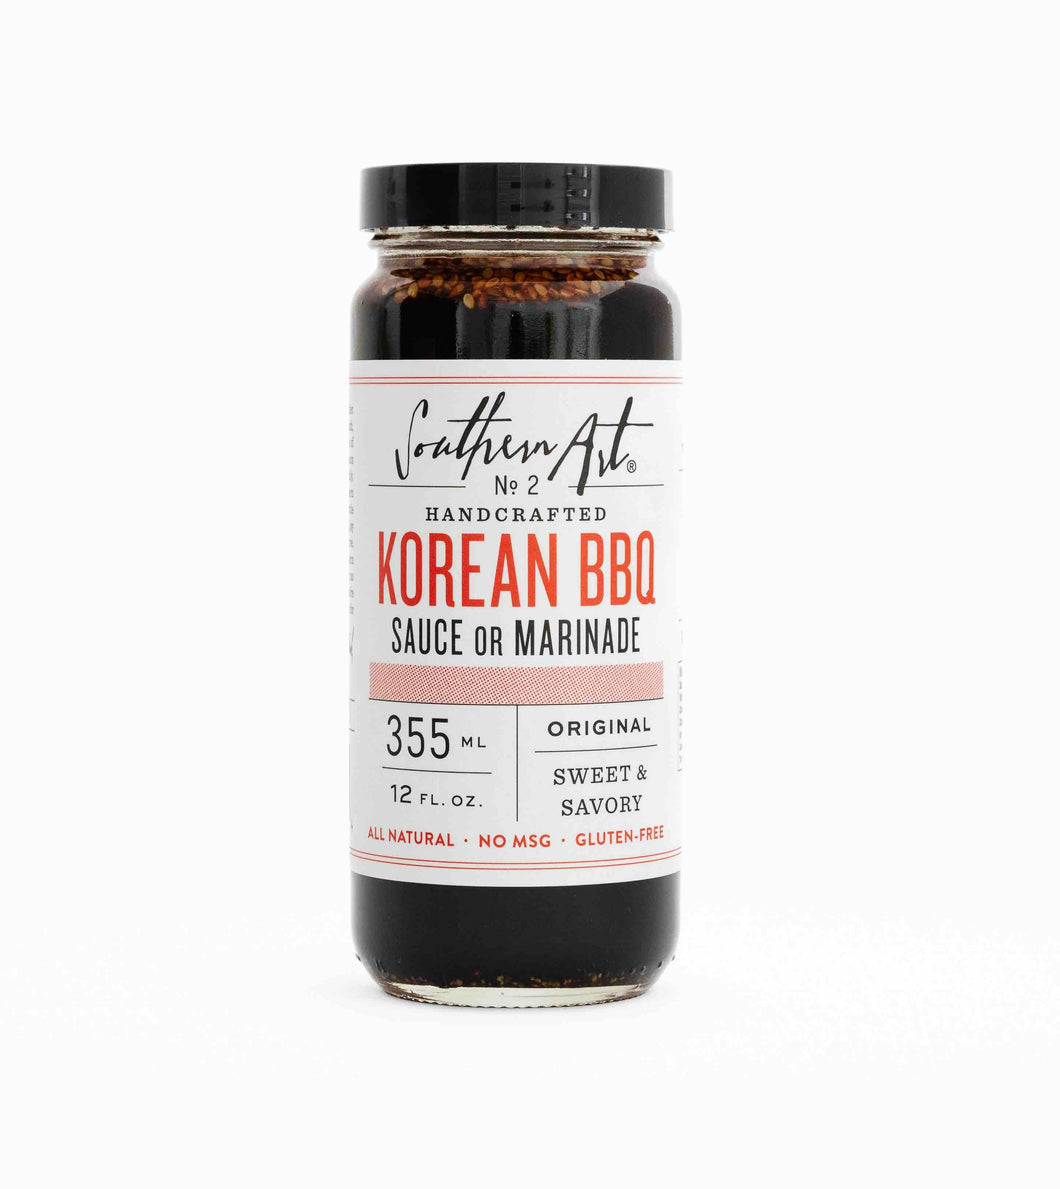 Southern Art Co. Original Korean BBQ Sauce